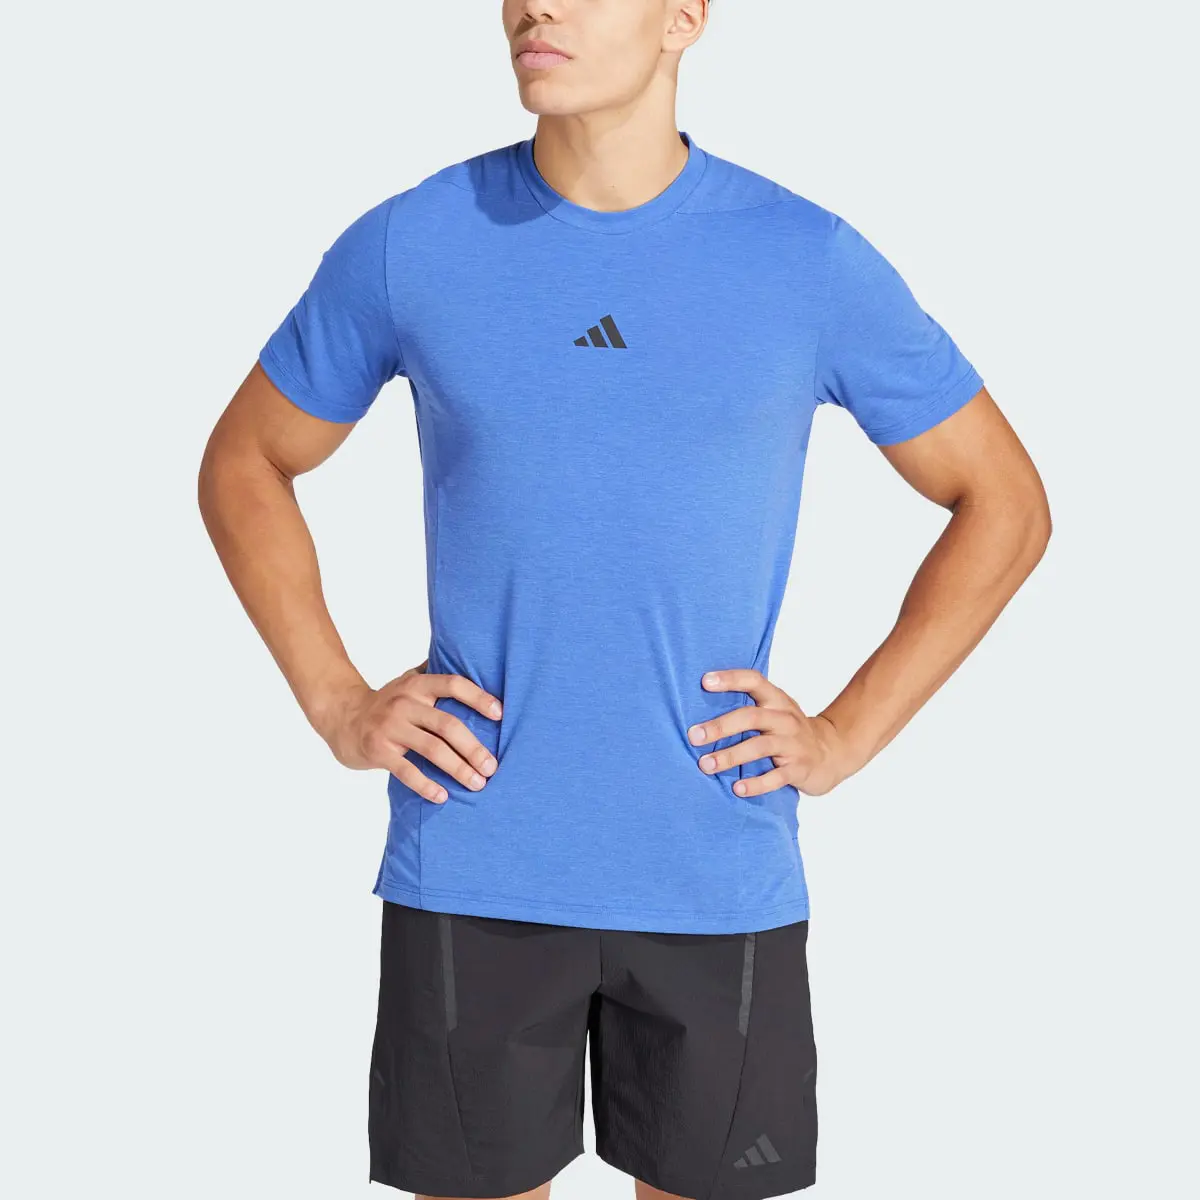 Adidas T-shirt Designed for Training Workout. 1